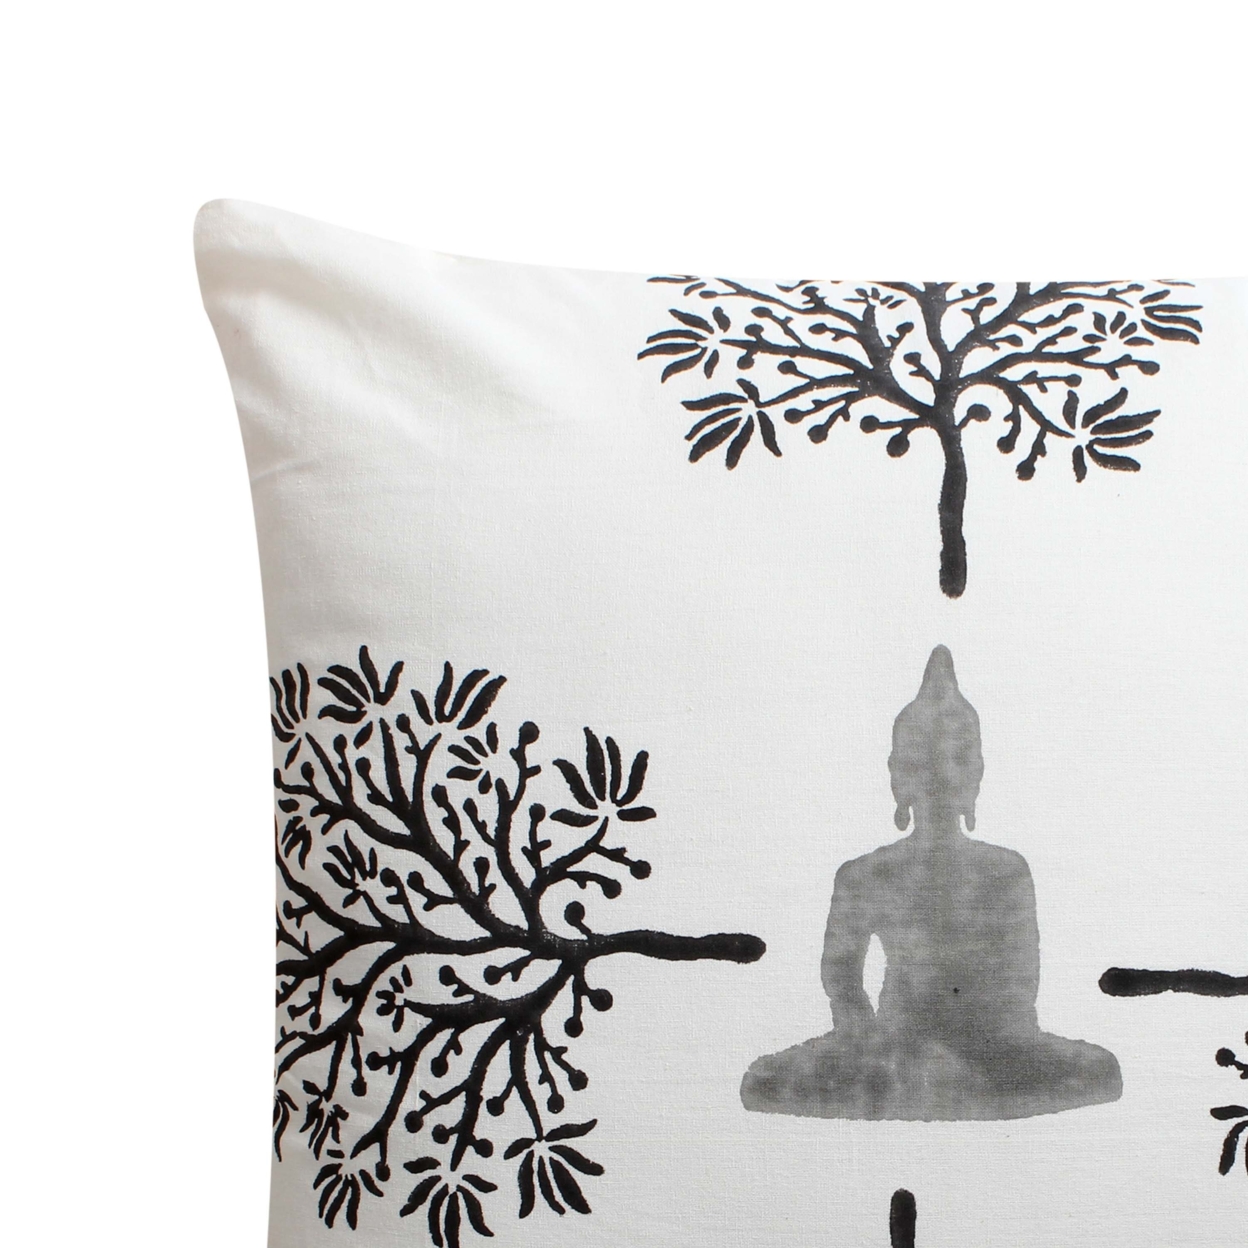 18 X 18 Square Cotton Accent Throw Pillow, Meditating Buddha, Tree Print, Set Of 2, White, Black